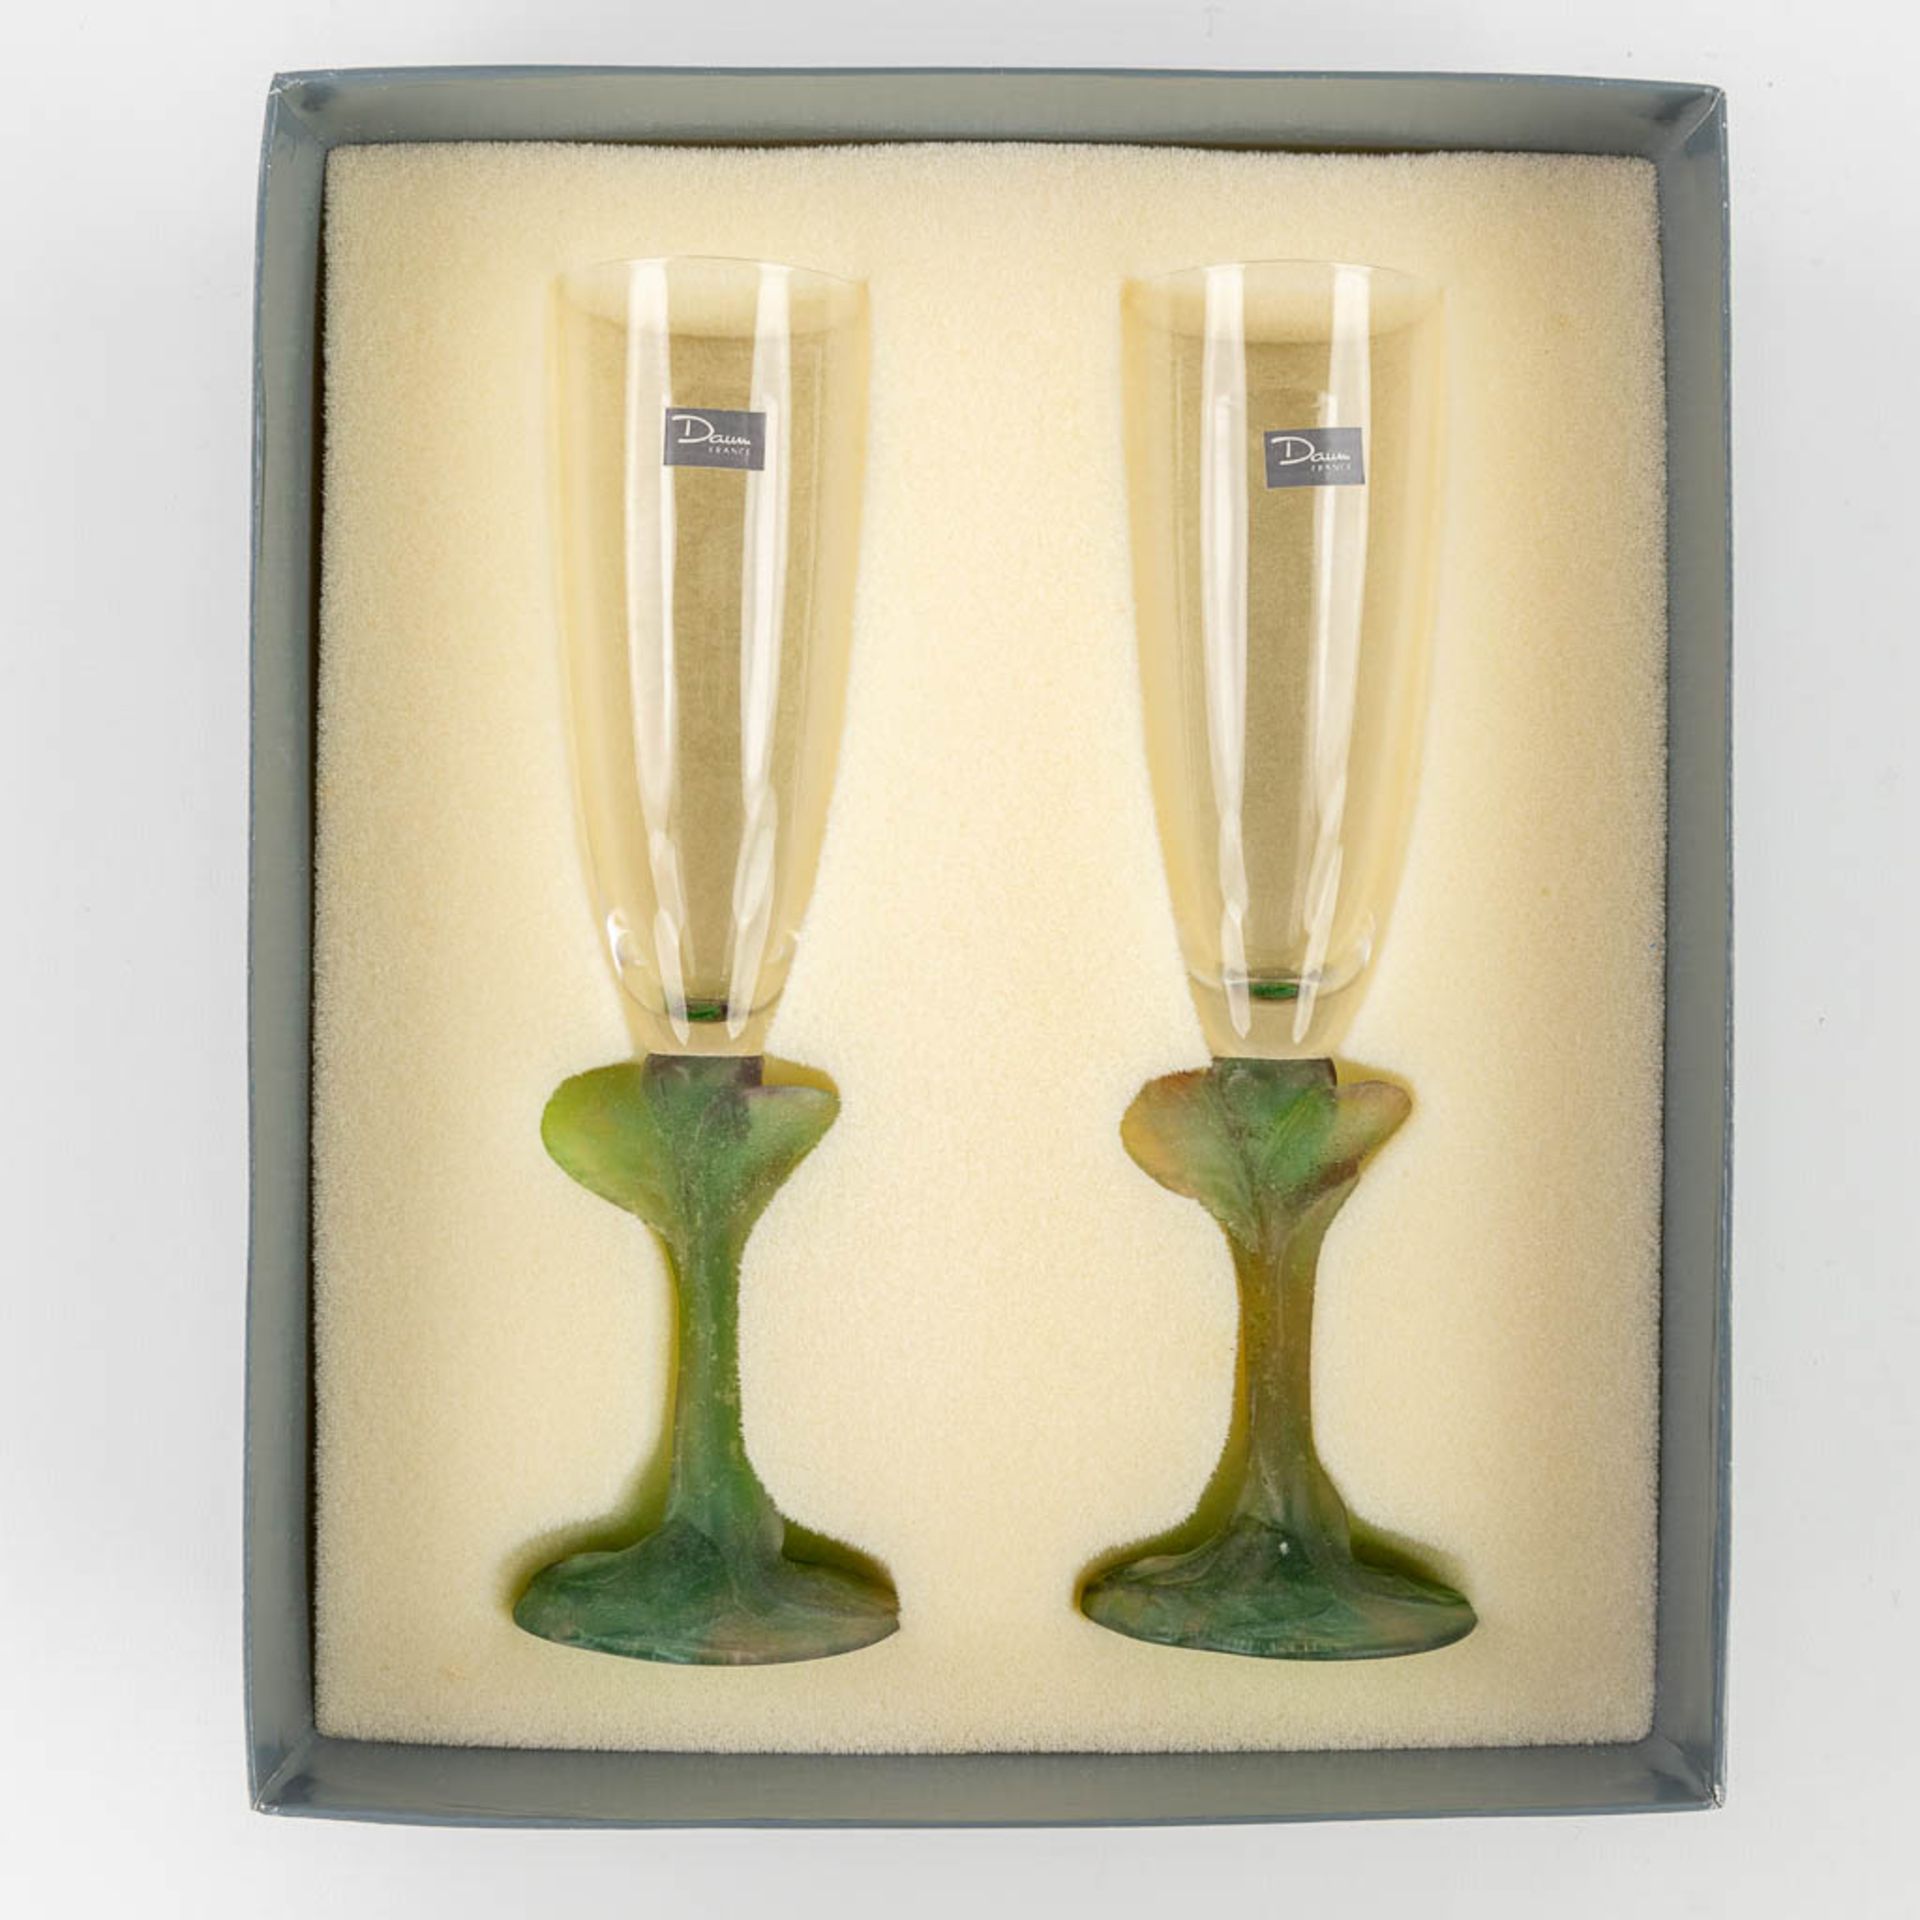 Daum France, 'Nature' a pair of champagne glasses in the original box. (H: 24 x D: 7 cm) - Bild 5 aus 13